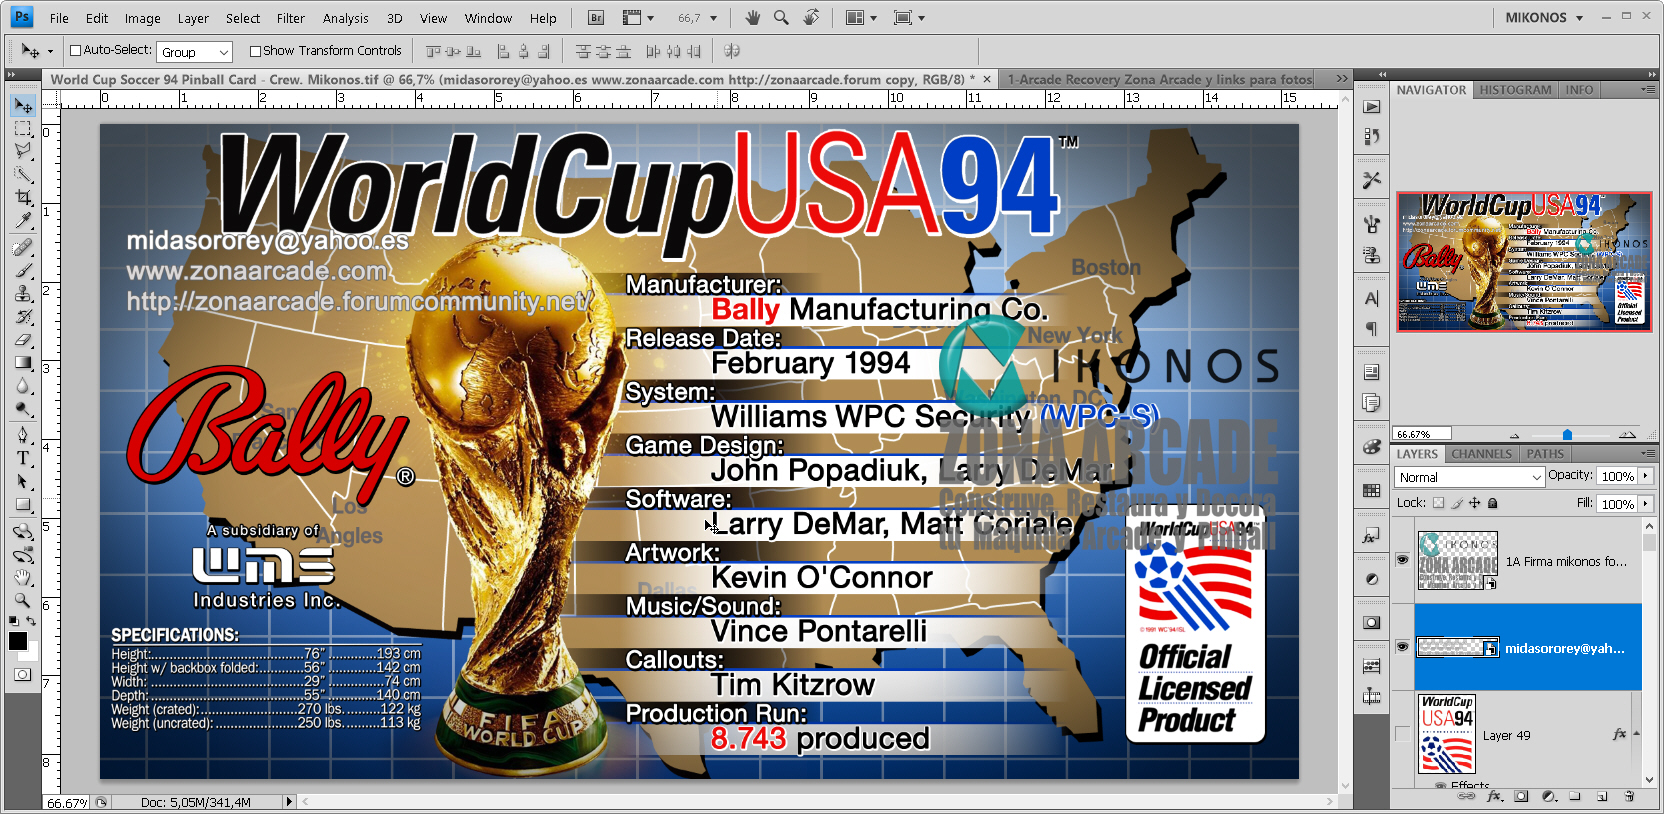 World Cup Soccer Pinball Card Customized - Crew. Mikonos1